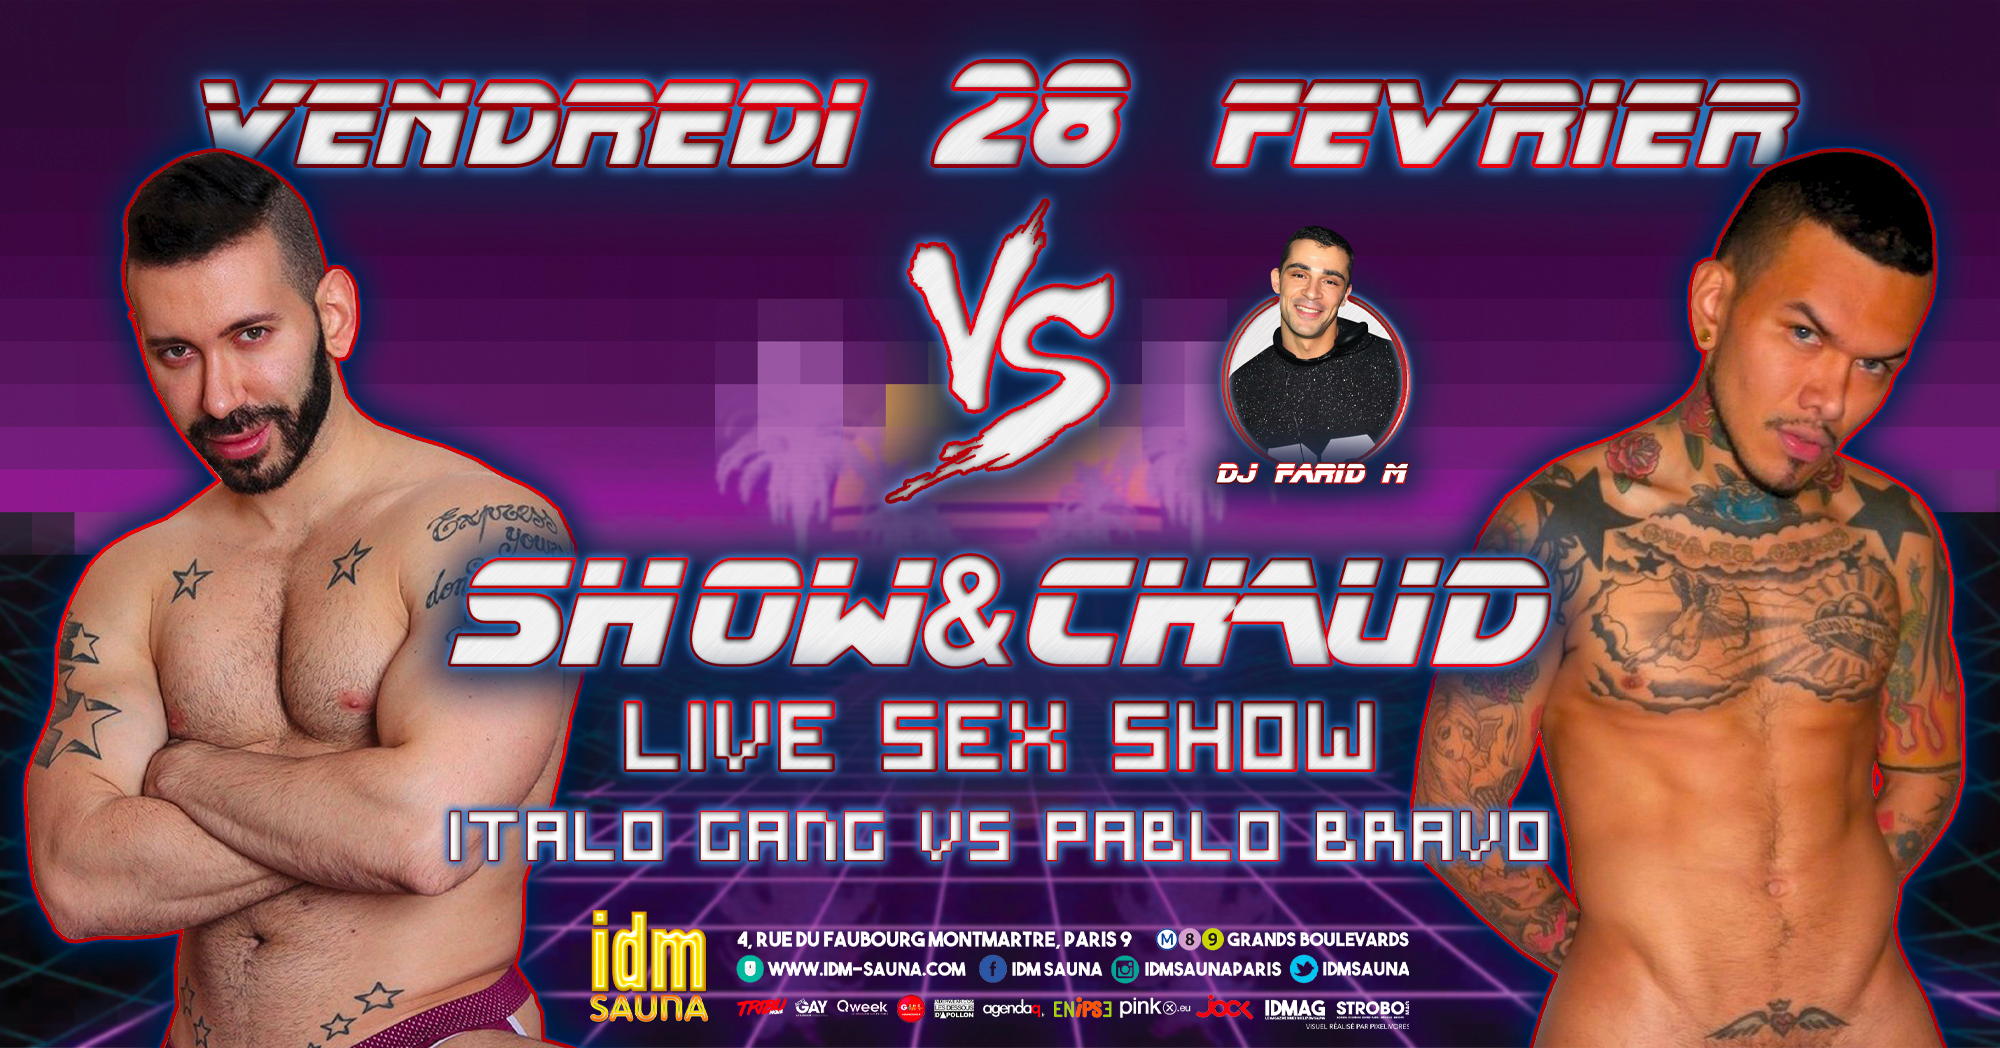 "Show & Chaud #26" Vendredi 28 Février au Sauna IDM